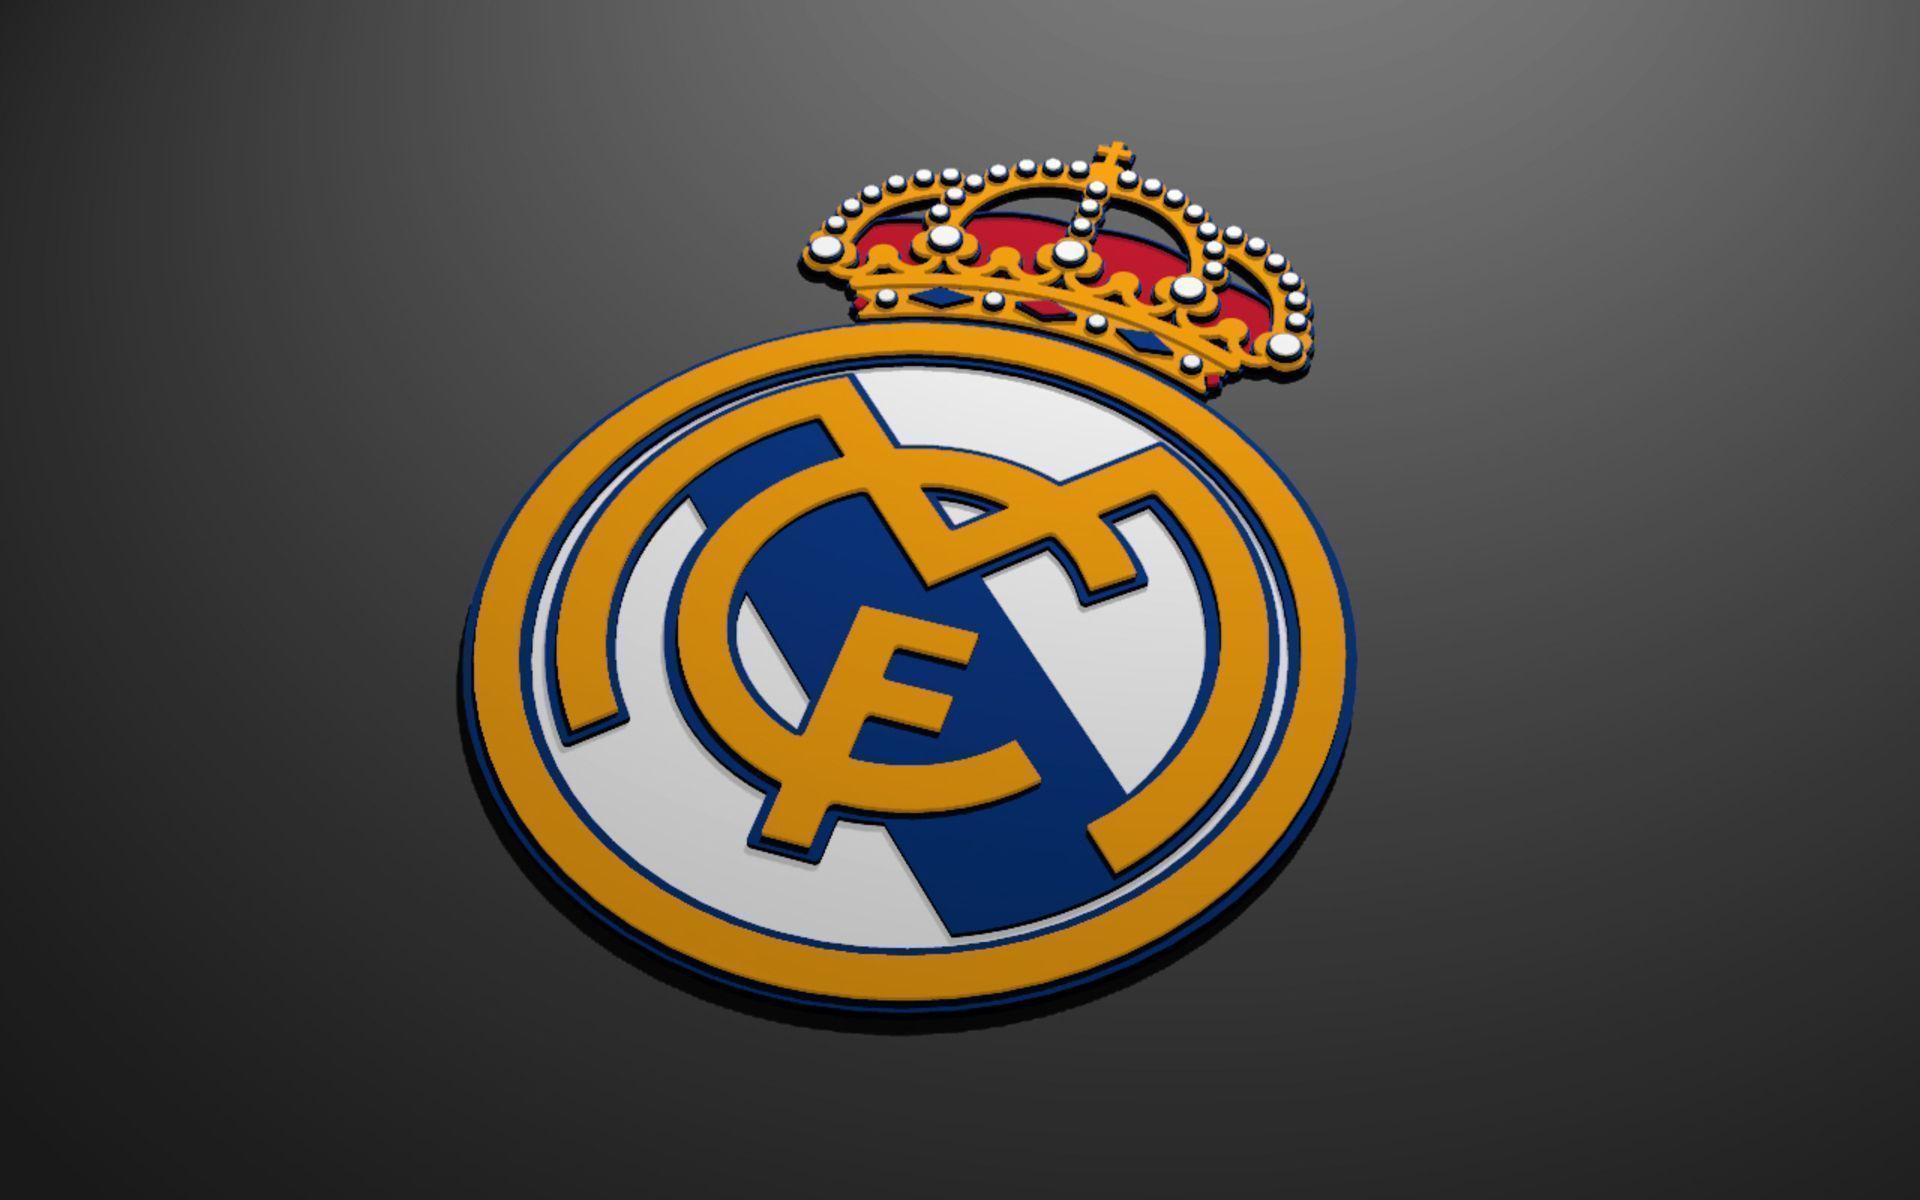 Real Madrid Logo Wallpaper HD 2016